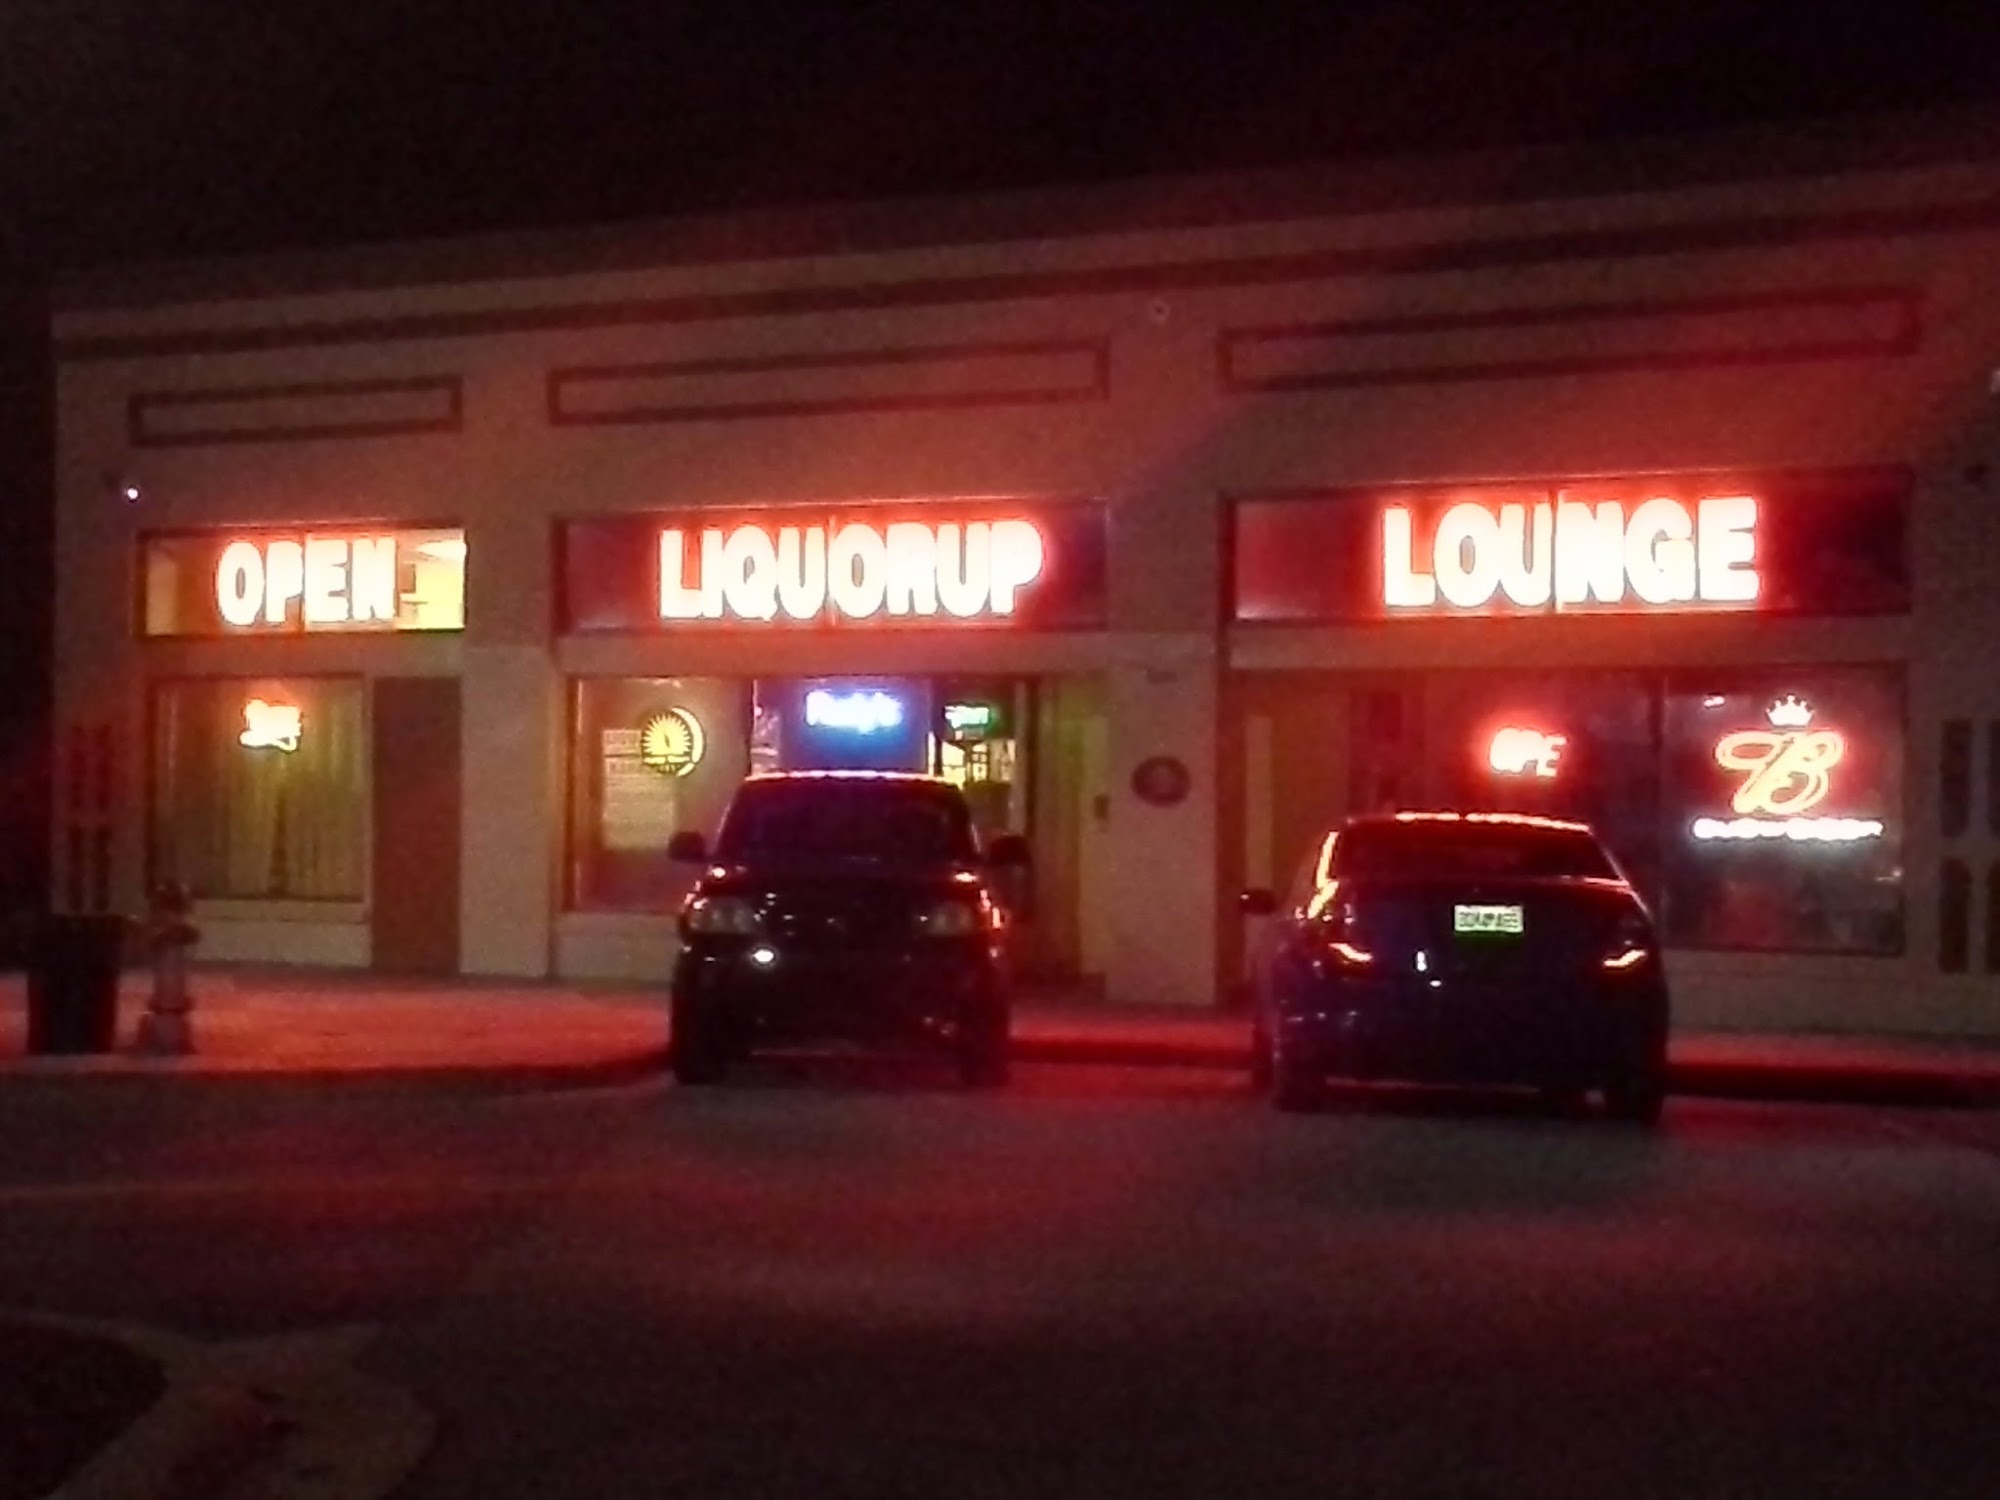 Rudy's Liquorup Lounge